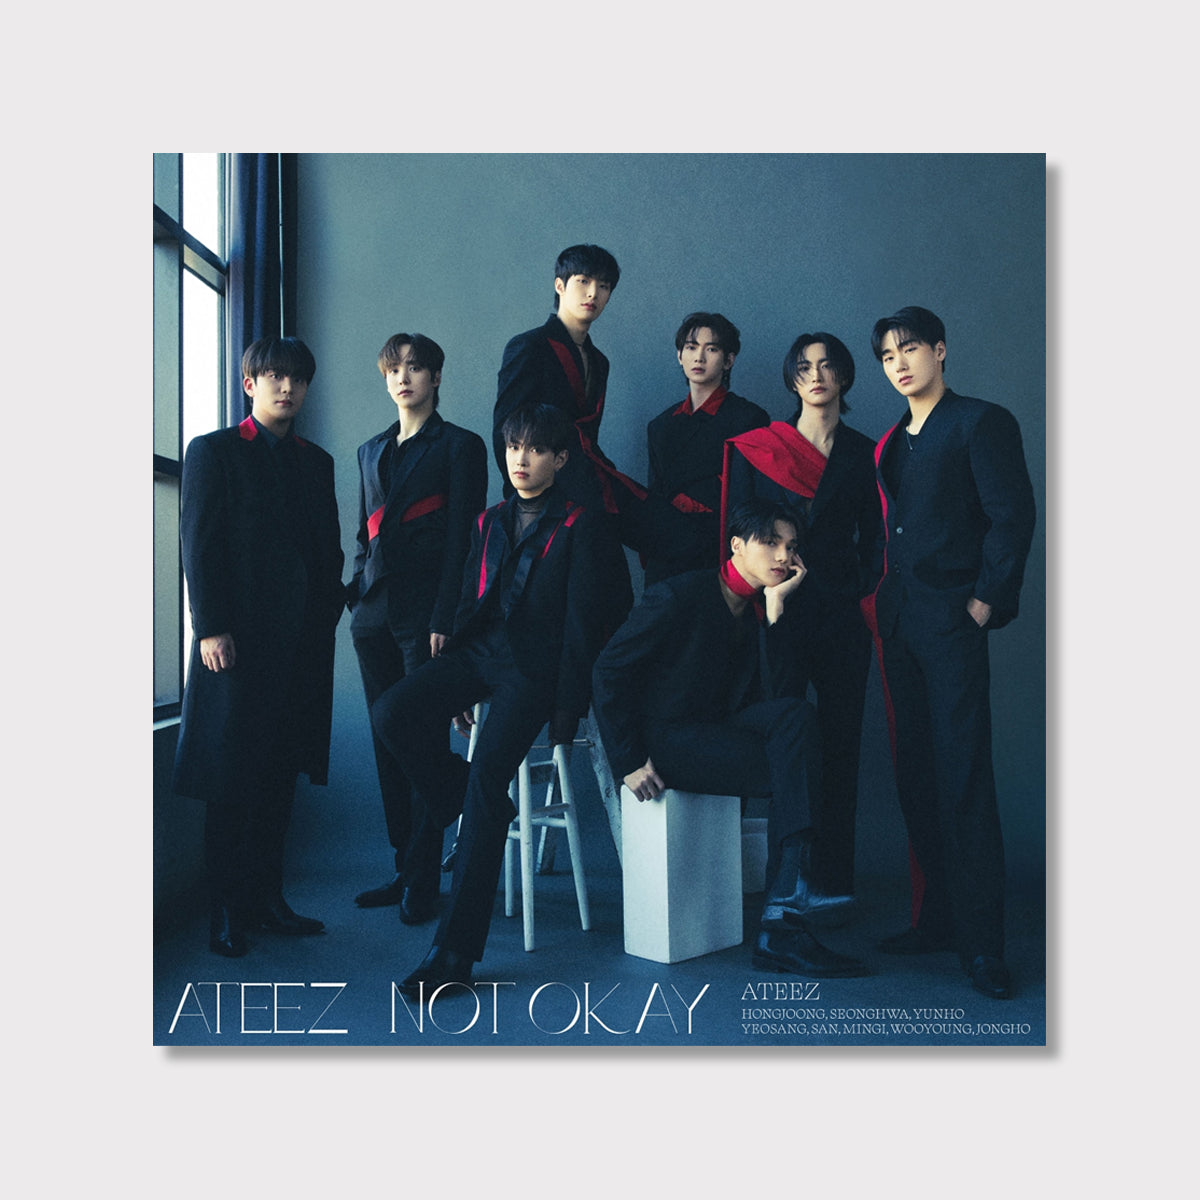 ATEEZ - JAPAN 3RD SINGLE - NOT OKAY [PRE-ORDER]